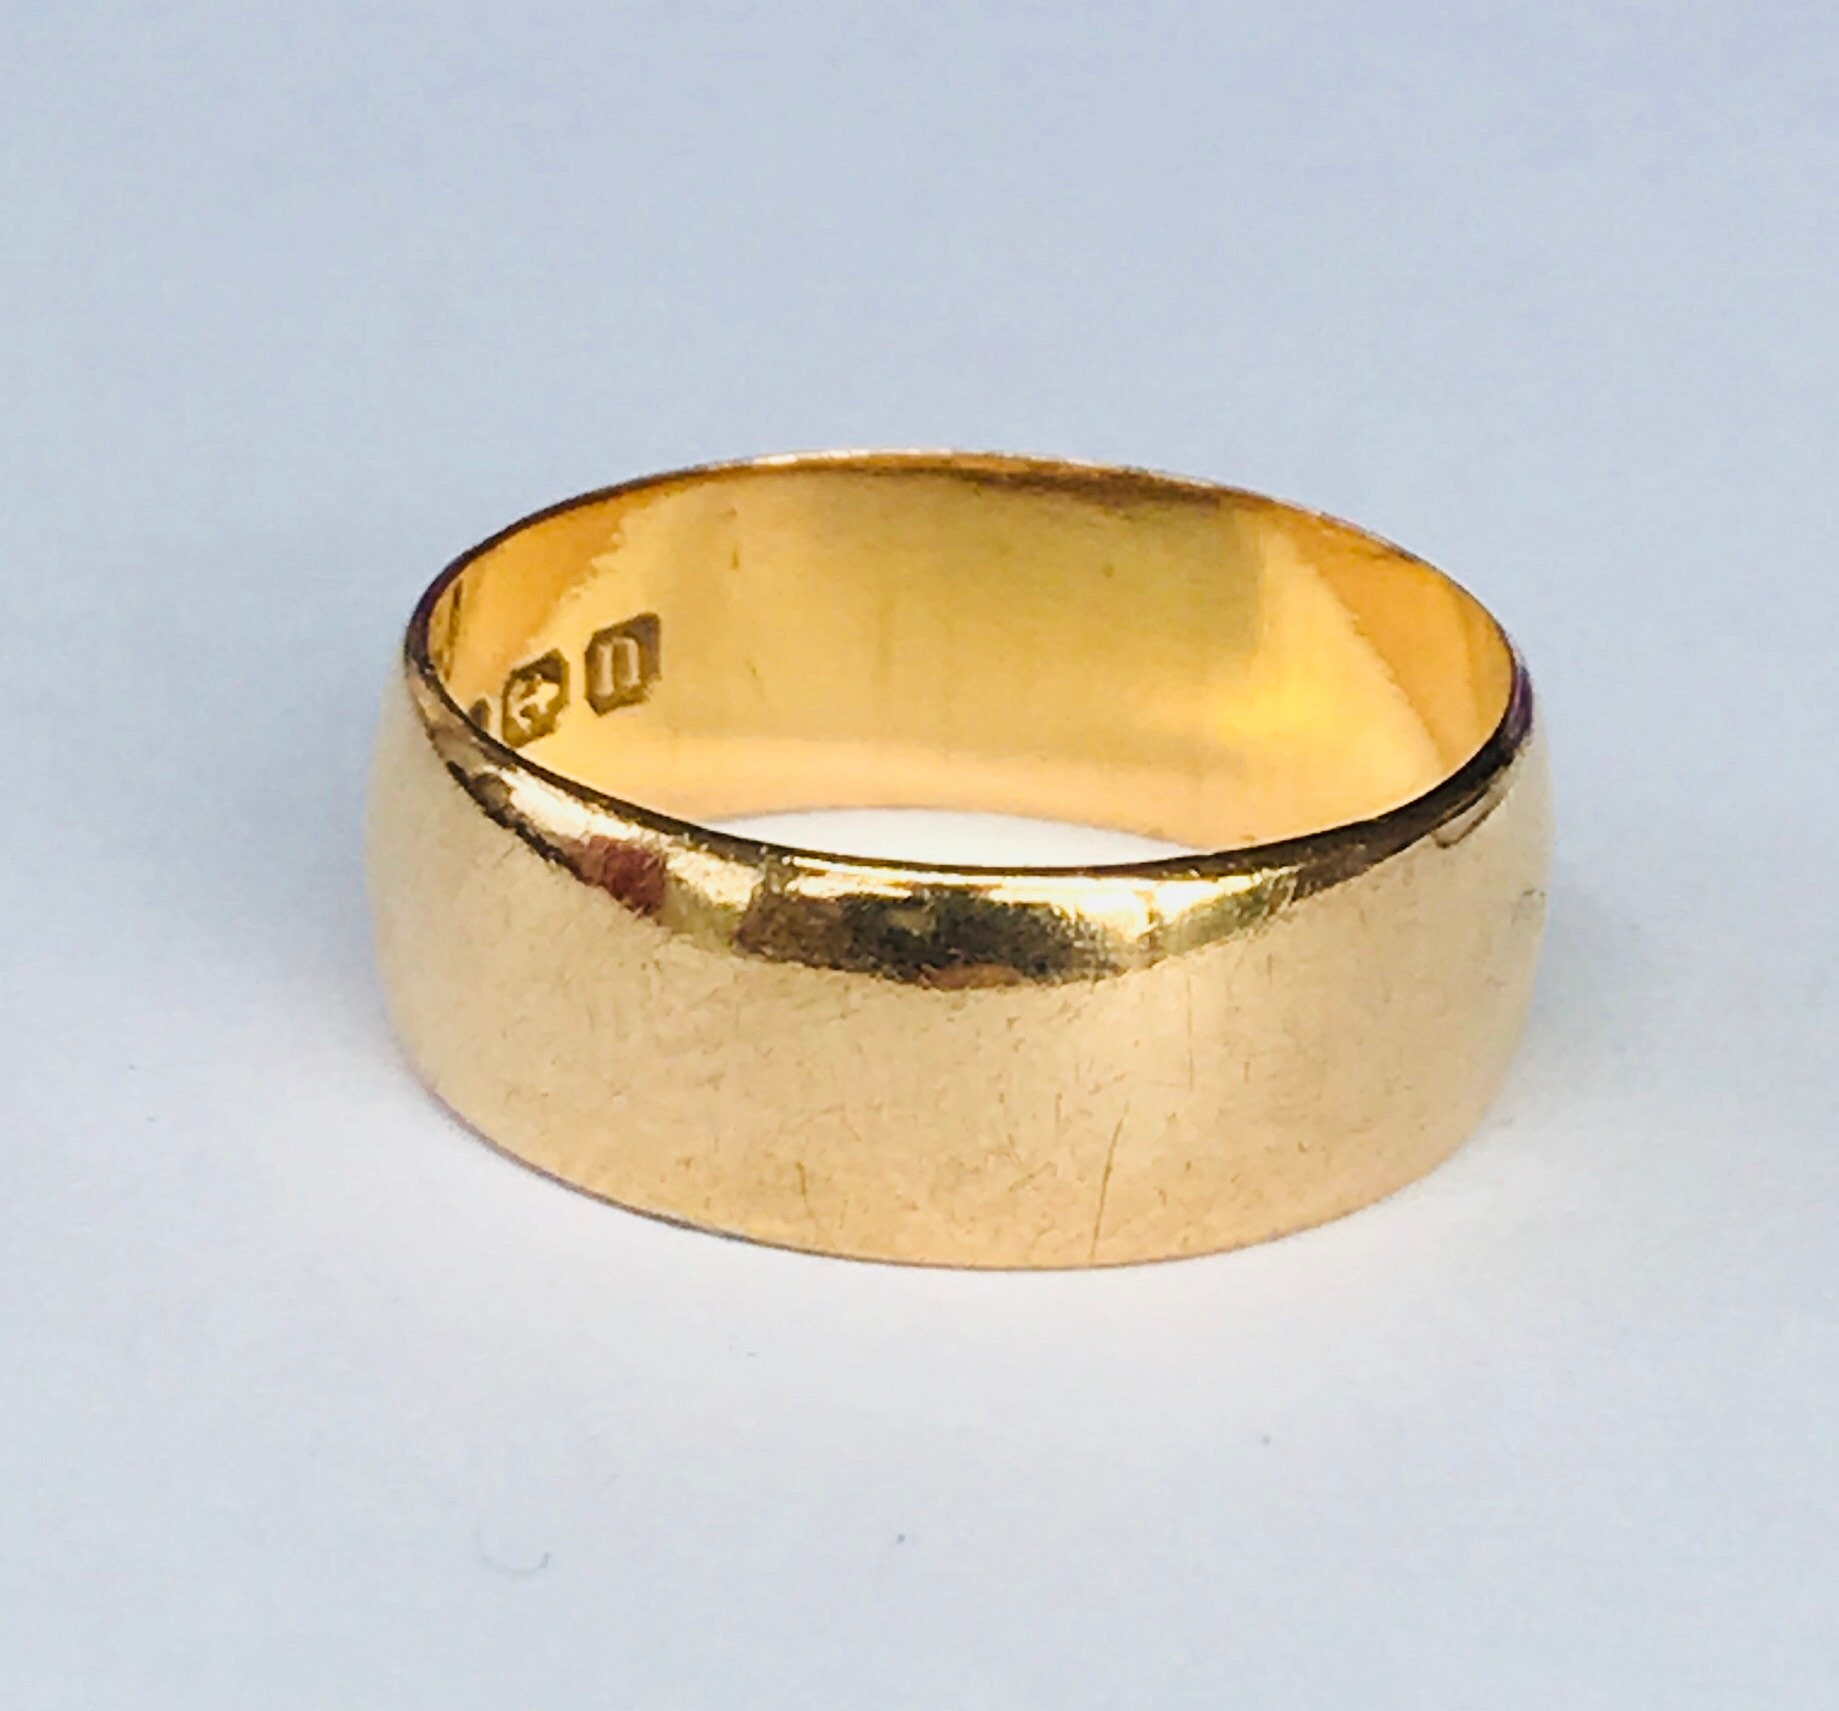 Stunning heavy antique 22ct gold wide band wedding ring - hallmarked ...